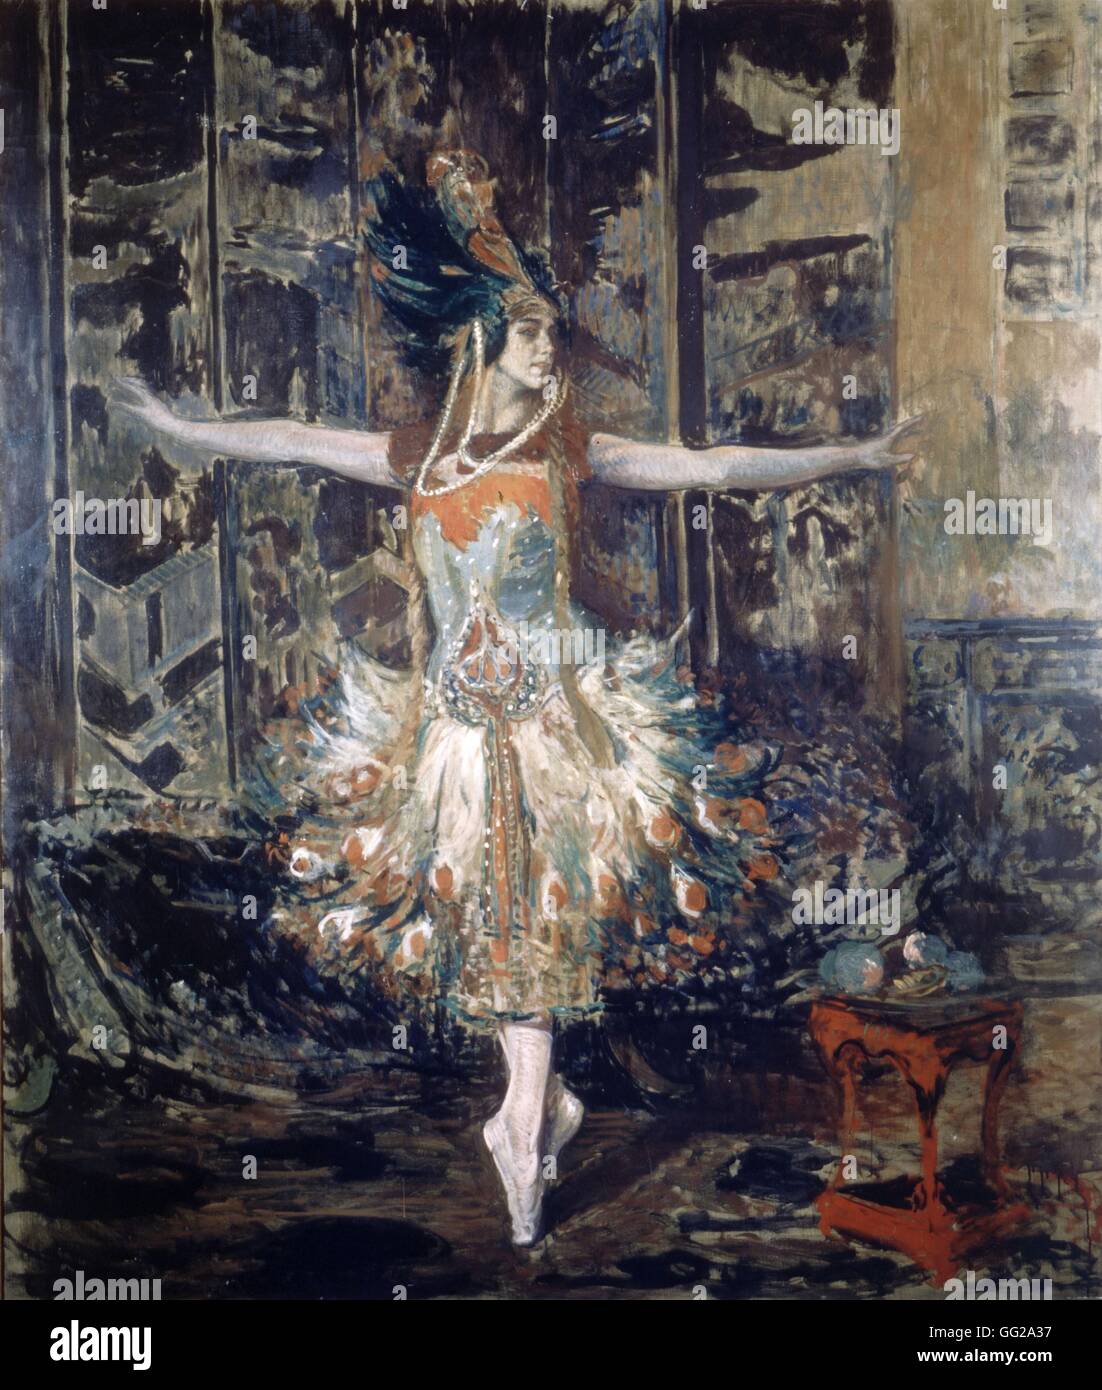 Jacques-Emile Blanche French school Portrait of Tamara Karsavina as 'The Firebird' 1910 Oil on canvas Paris. bibliothèque-musée de l'Opéra Garnier Stock Photo